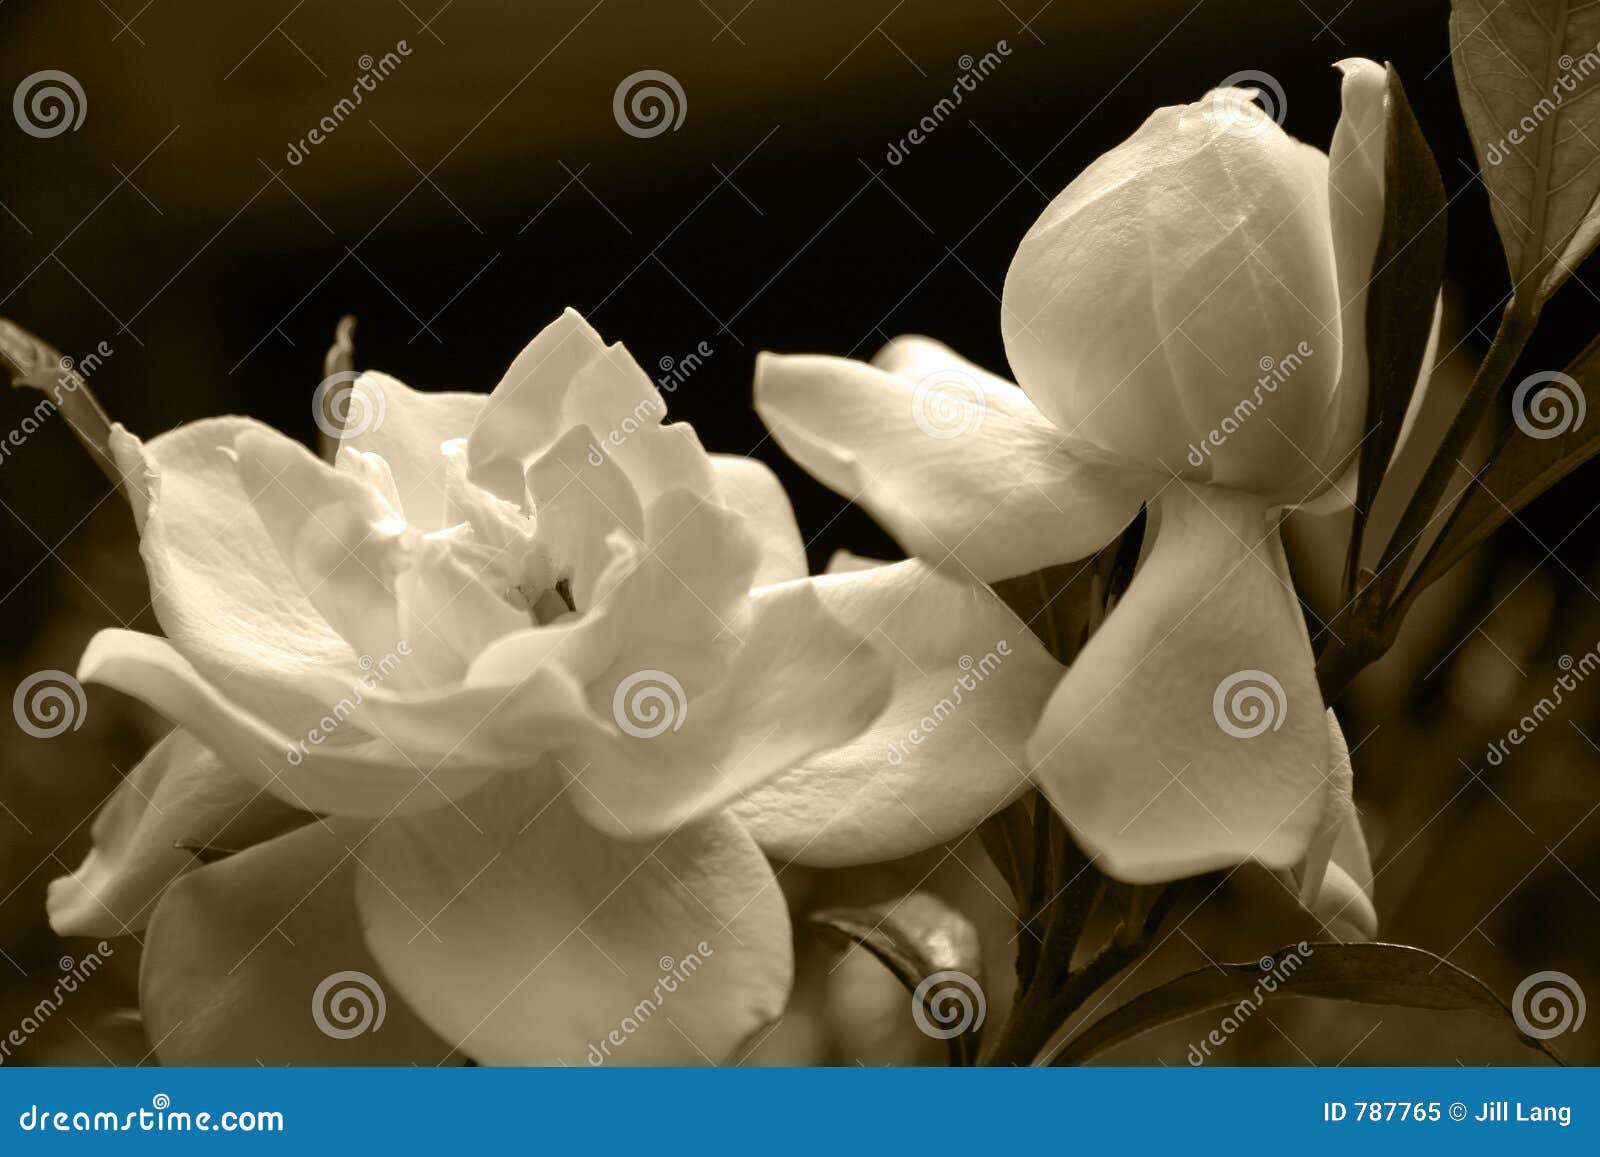 gardenia blooms